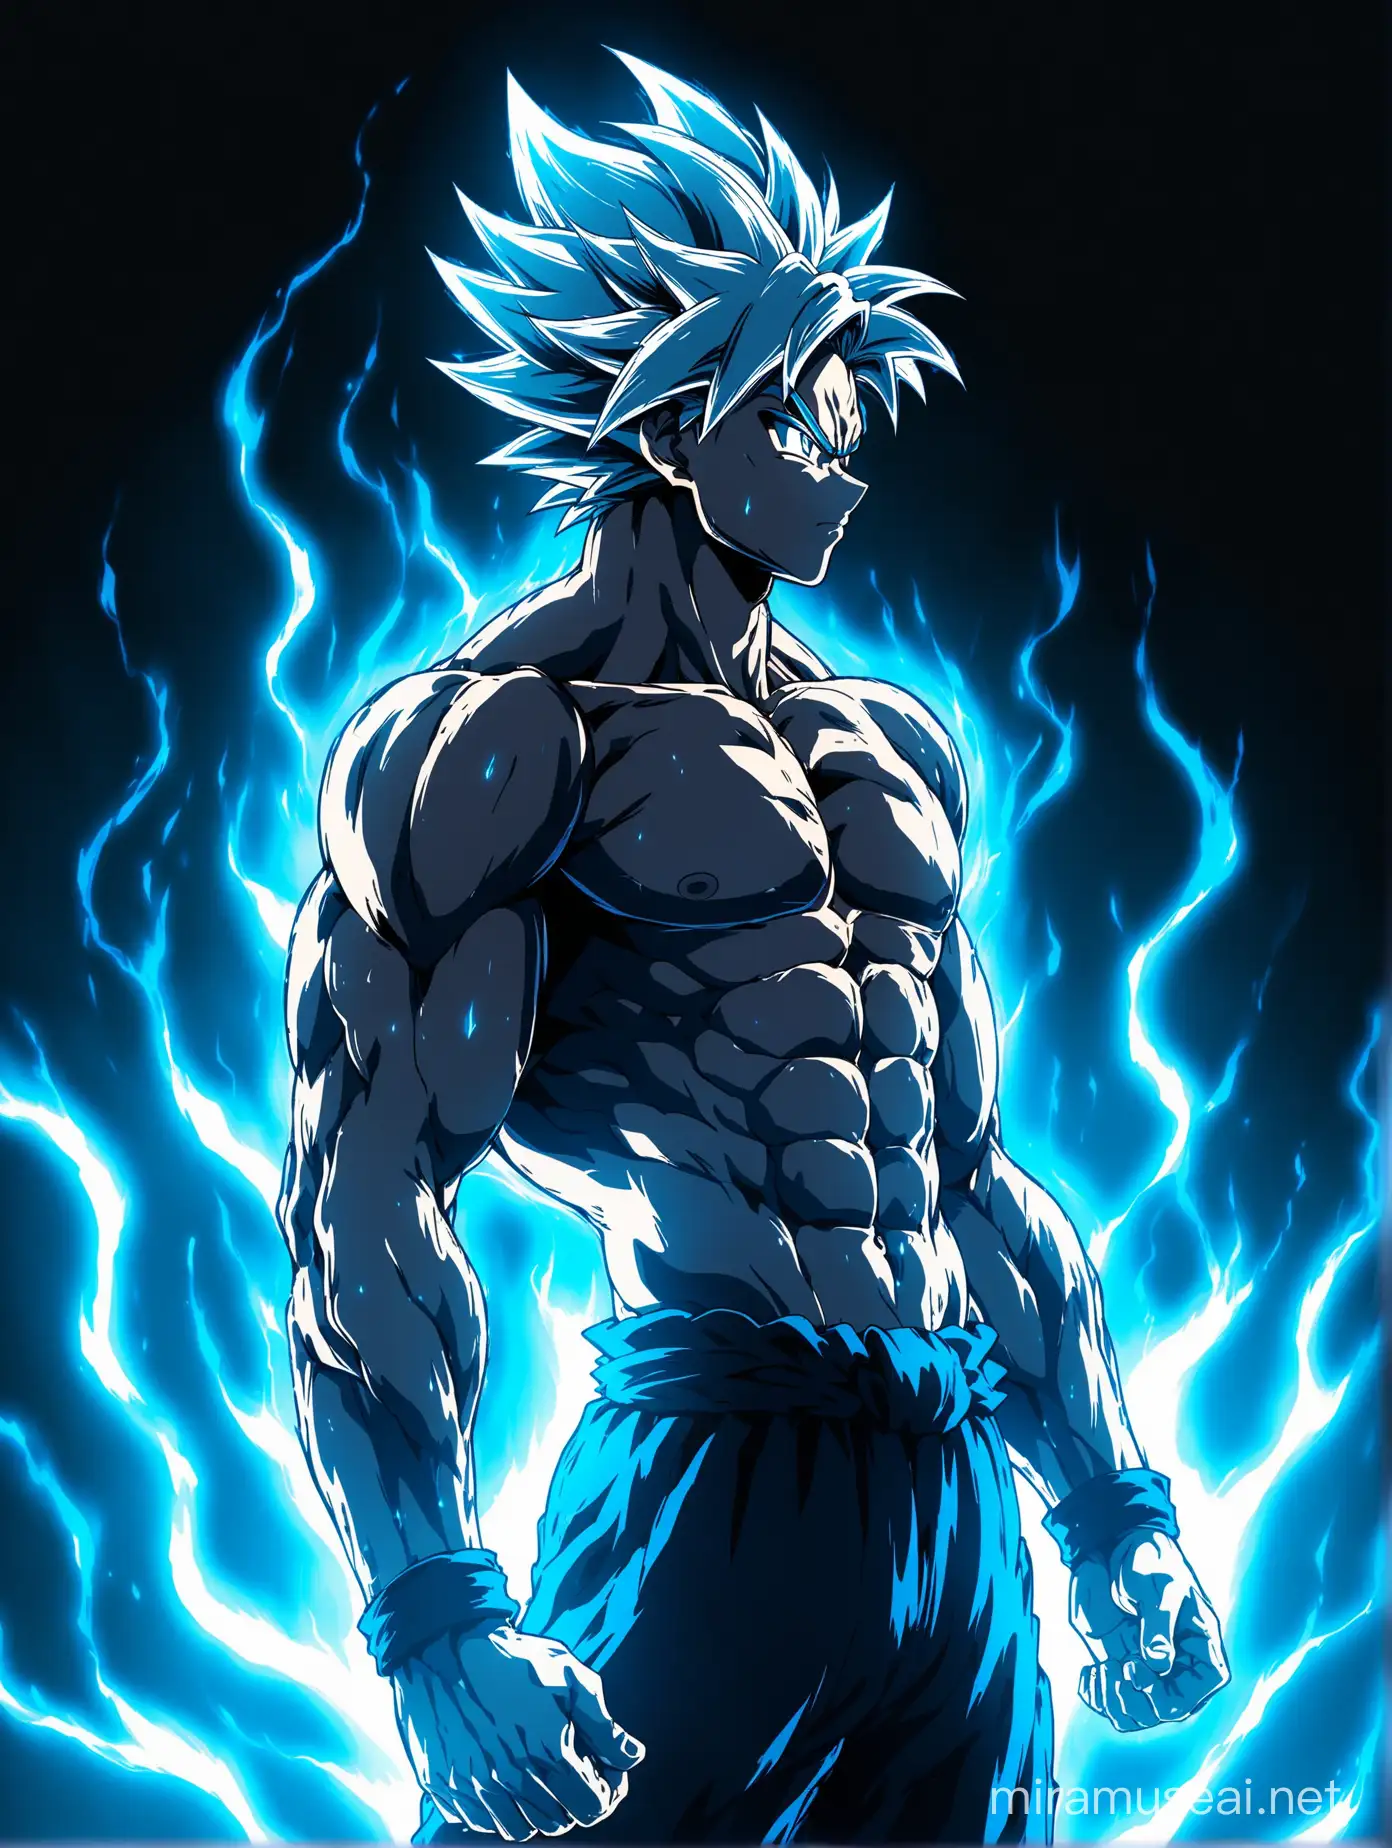 Shirtless Goku in New Dark Blue and Light Cyan Transformation with Intense Aura